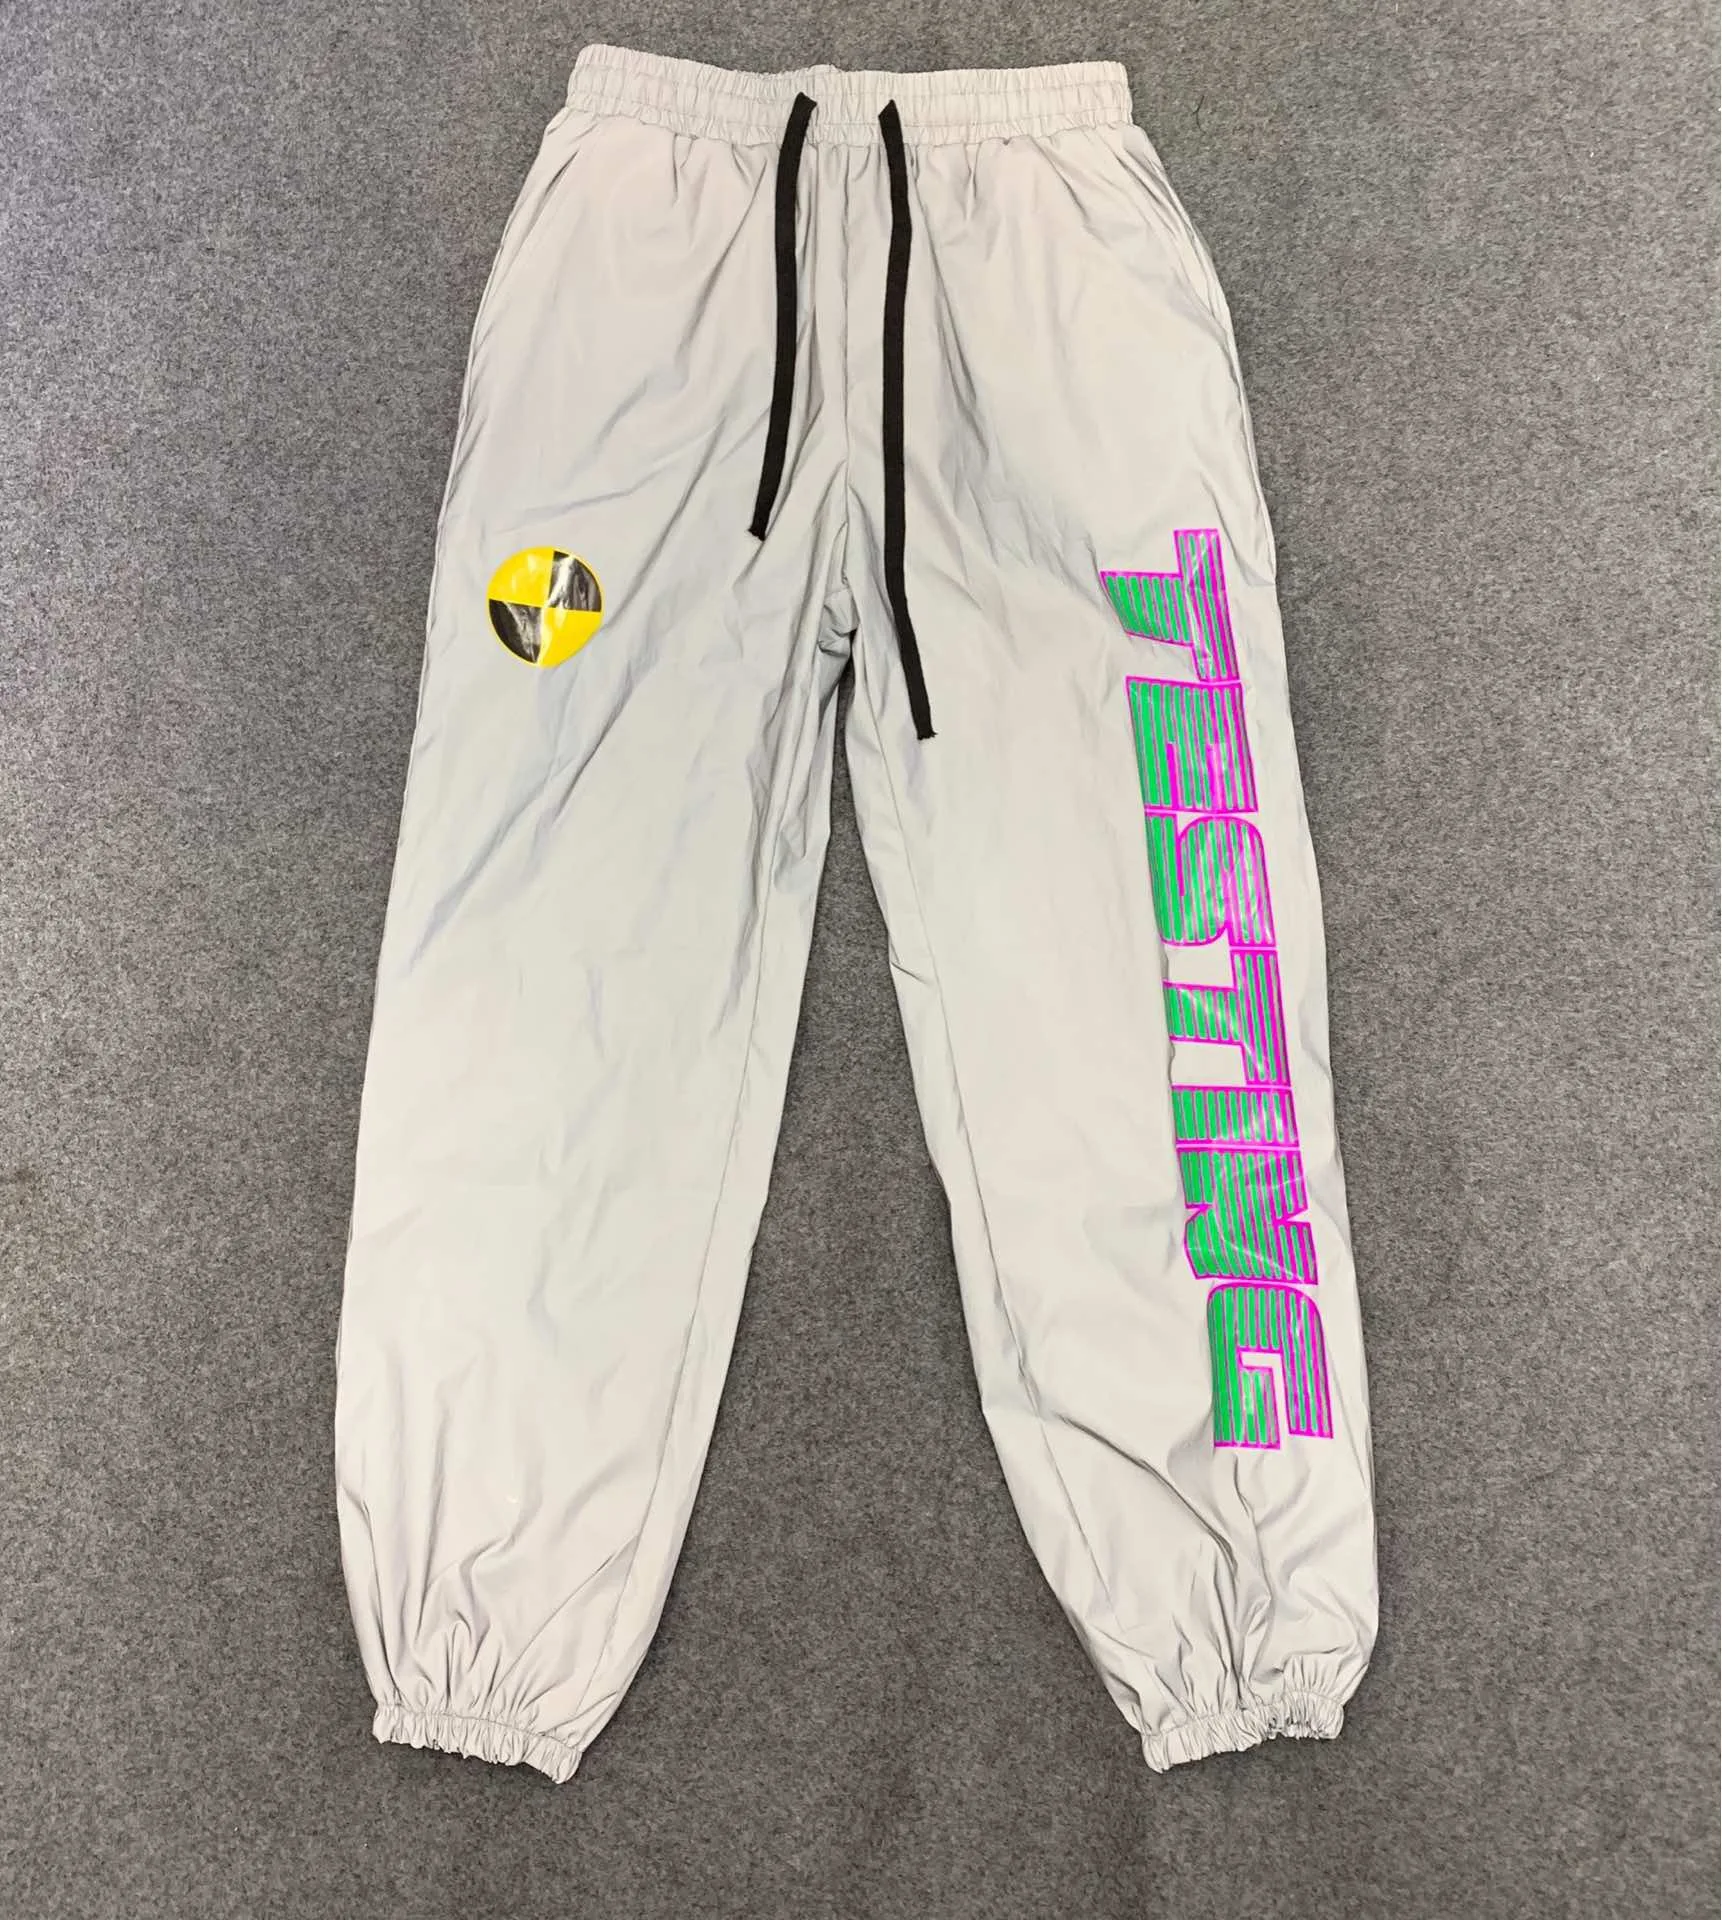 Autumn New A$AP Rocky Testing Printed 3M Reflective Sweatpants Men Women Joggers Pants Loose Fit Hiphop Men Sweatpants Trousers